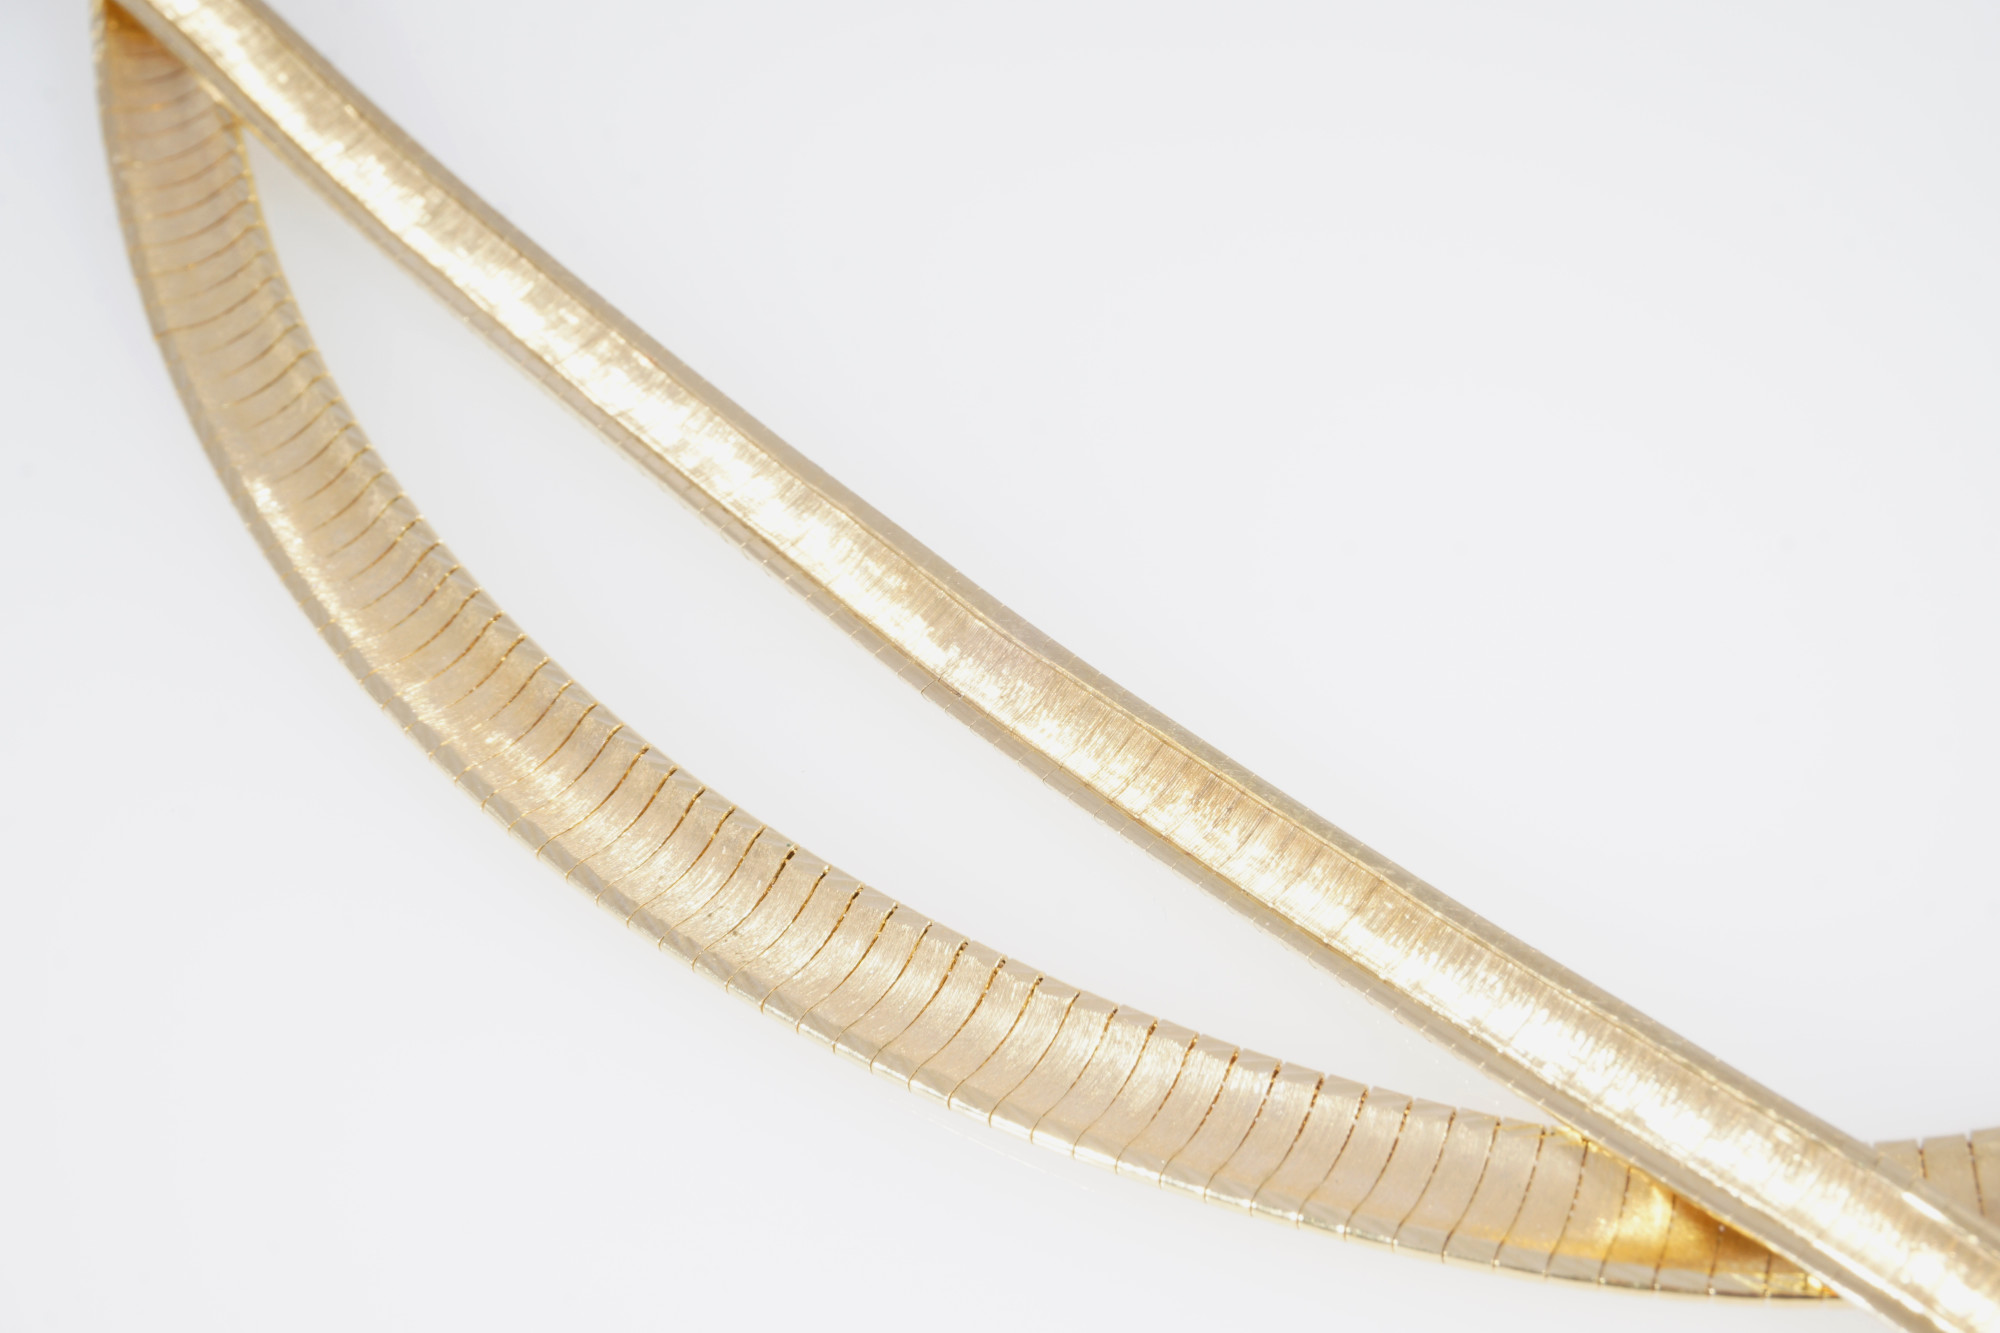 750 jewelry set - gold necklace and bracelet, 18K Gold Schmuckset - Collier und Armband, - Image 4 of 5